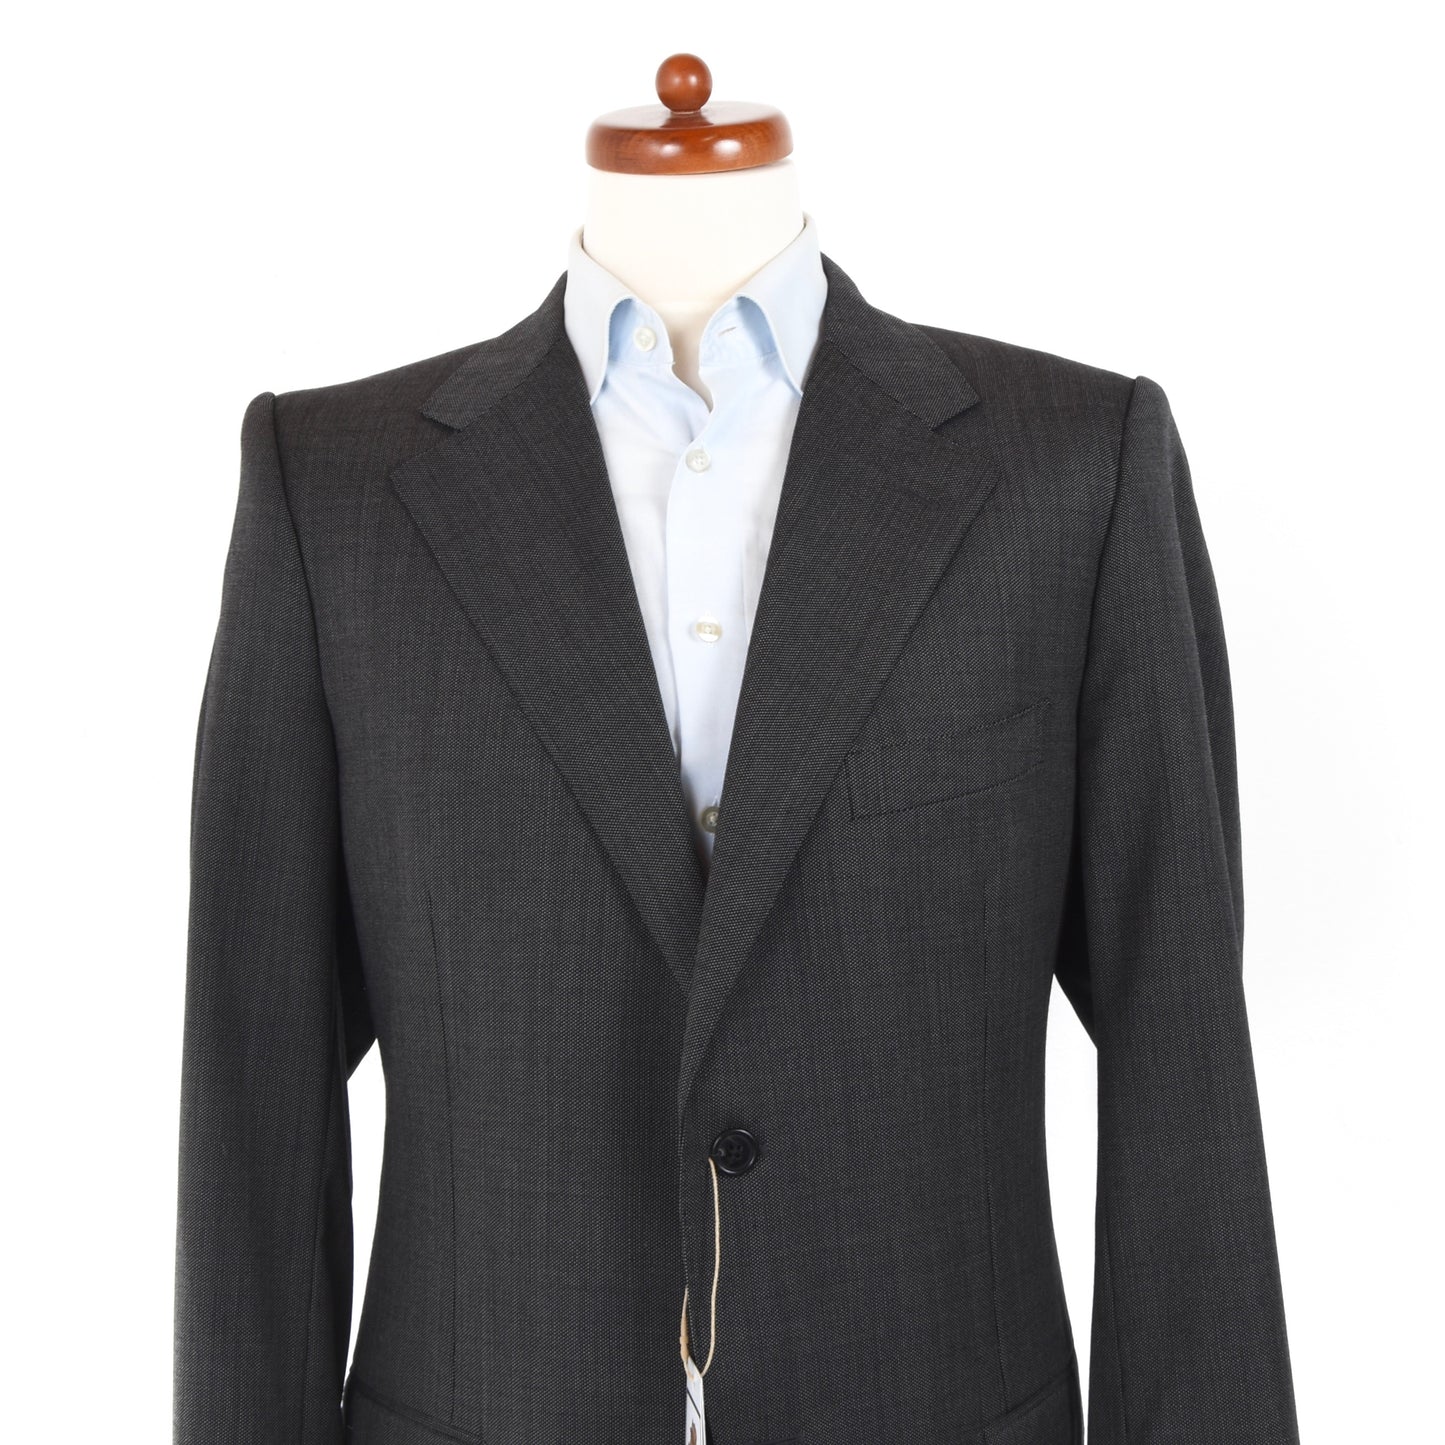 Corneliani Nailhead Wool Suit Size 54 - Charcoal